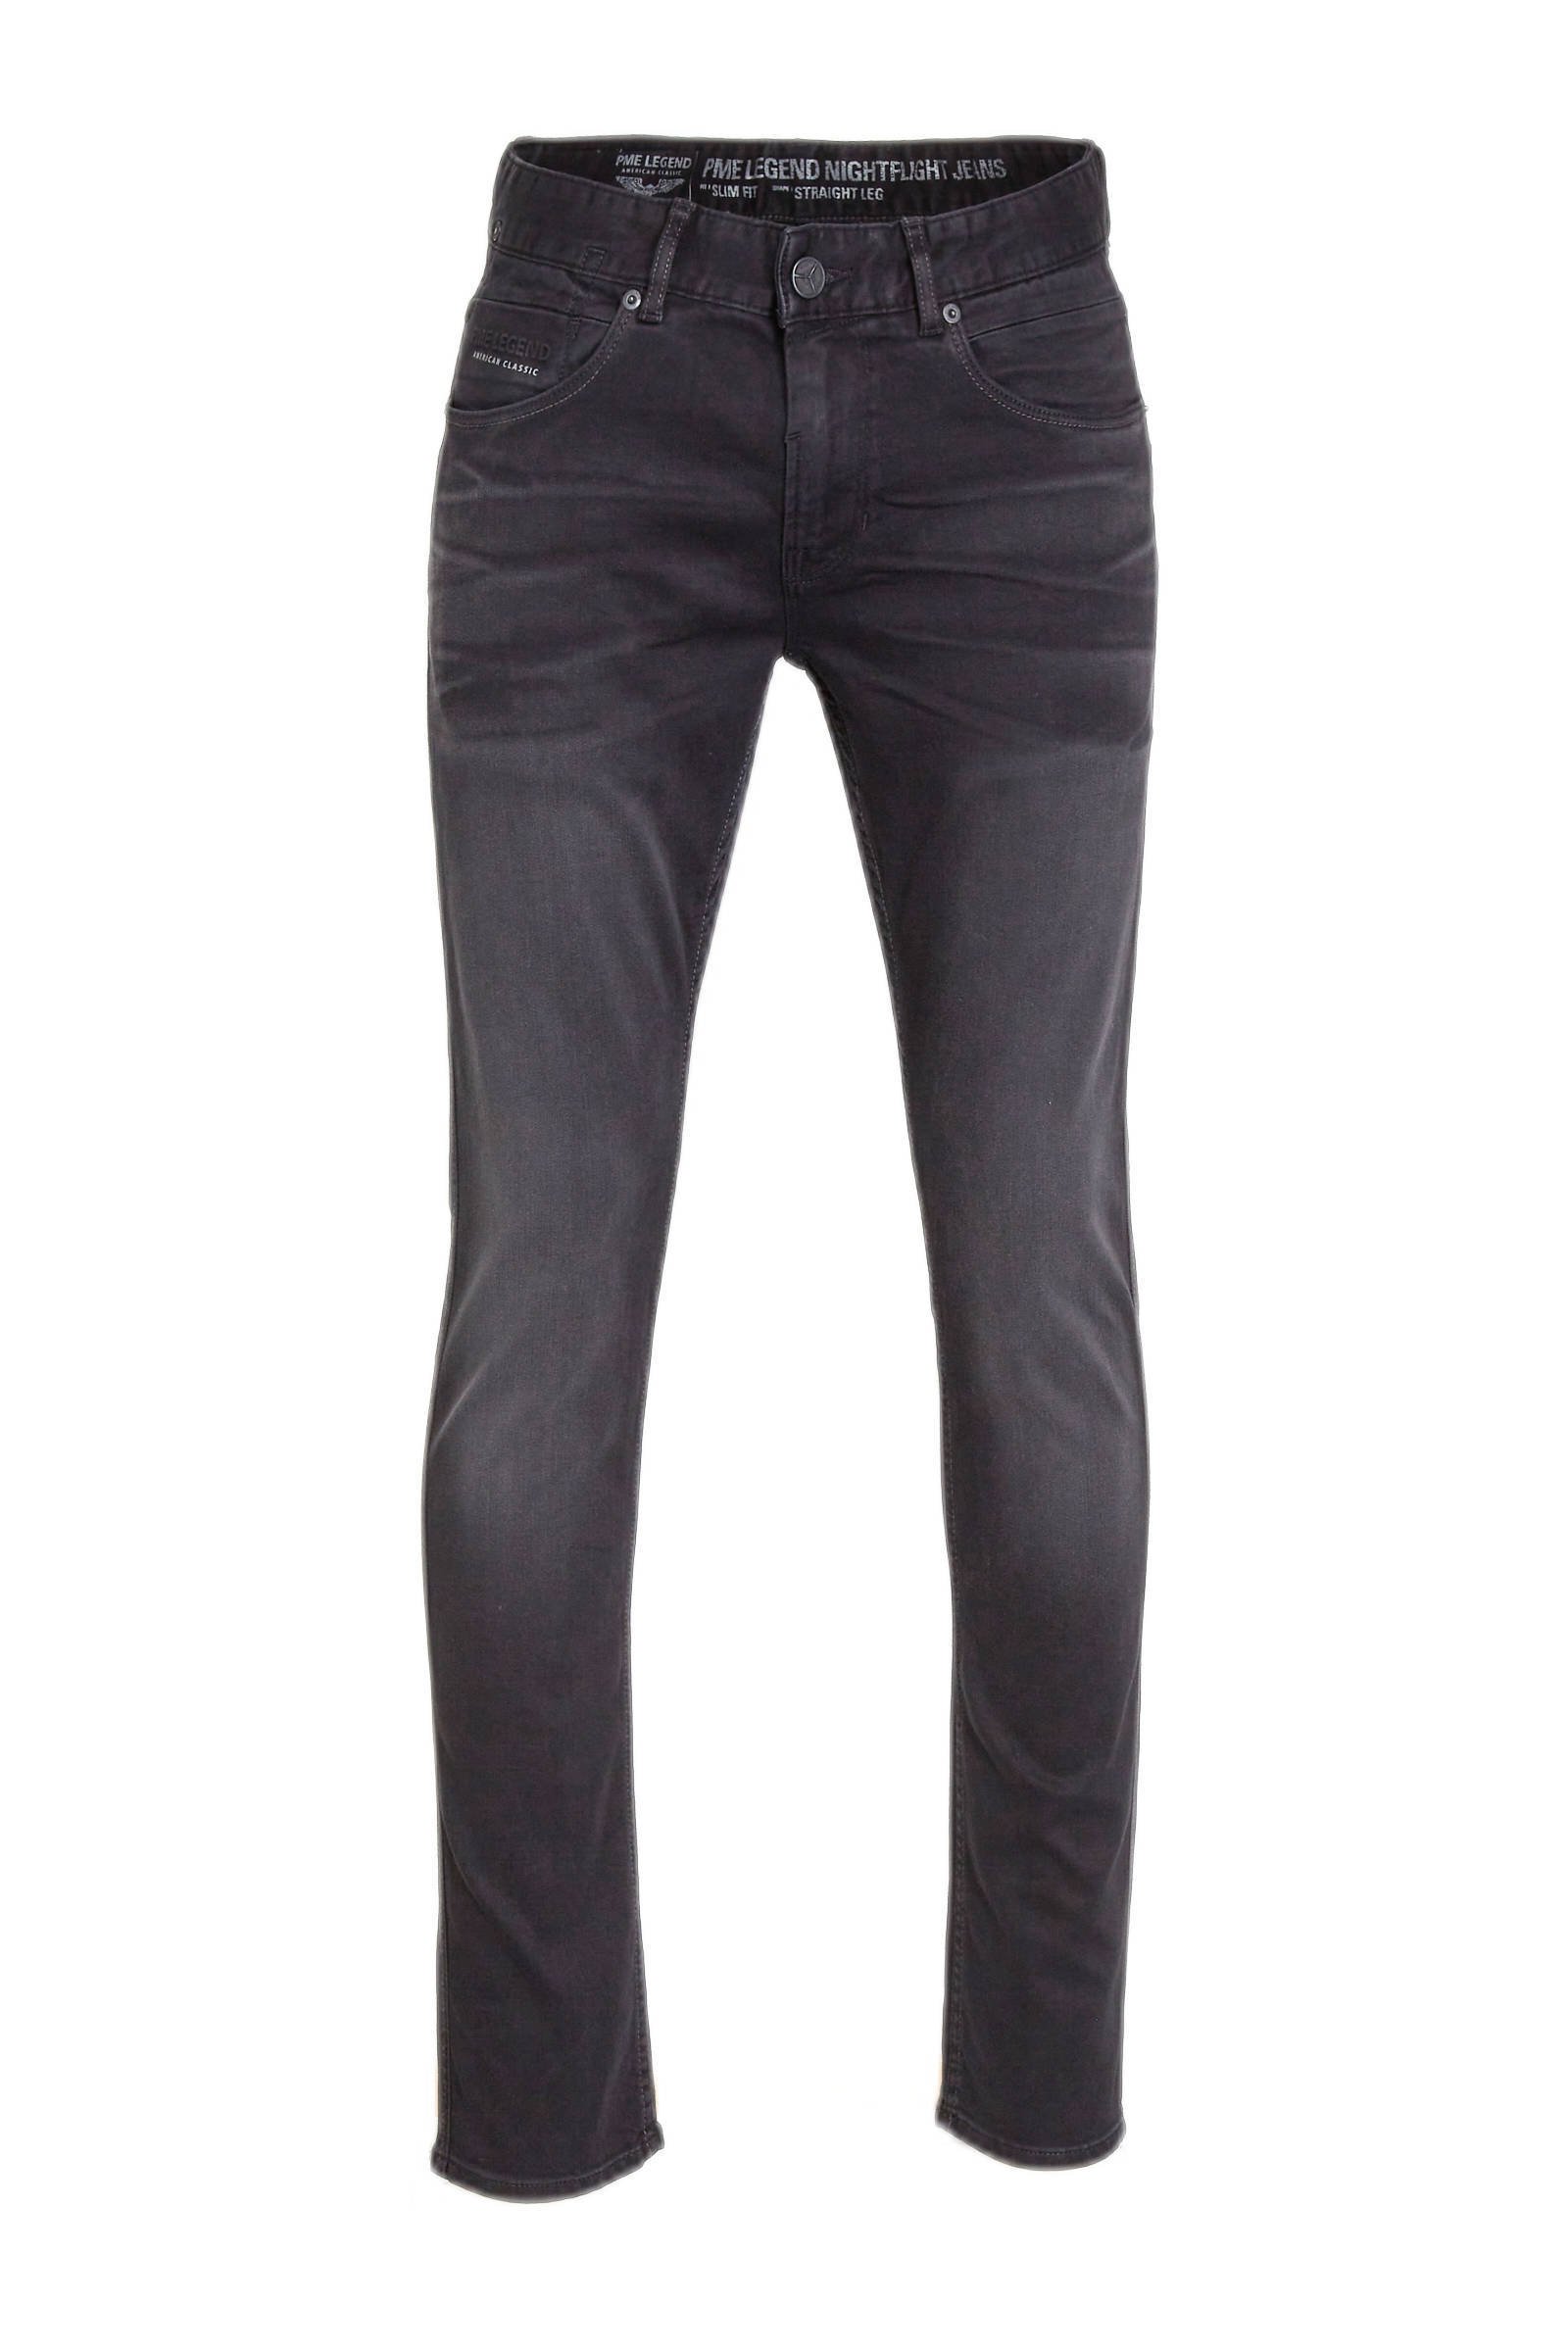 adelaar Gespecificeerd temperatuur Pme Legend Nightflight Jeans Slim Fit Straight Leg Portugal, SAVE 49% -  lutheranems.com